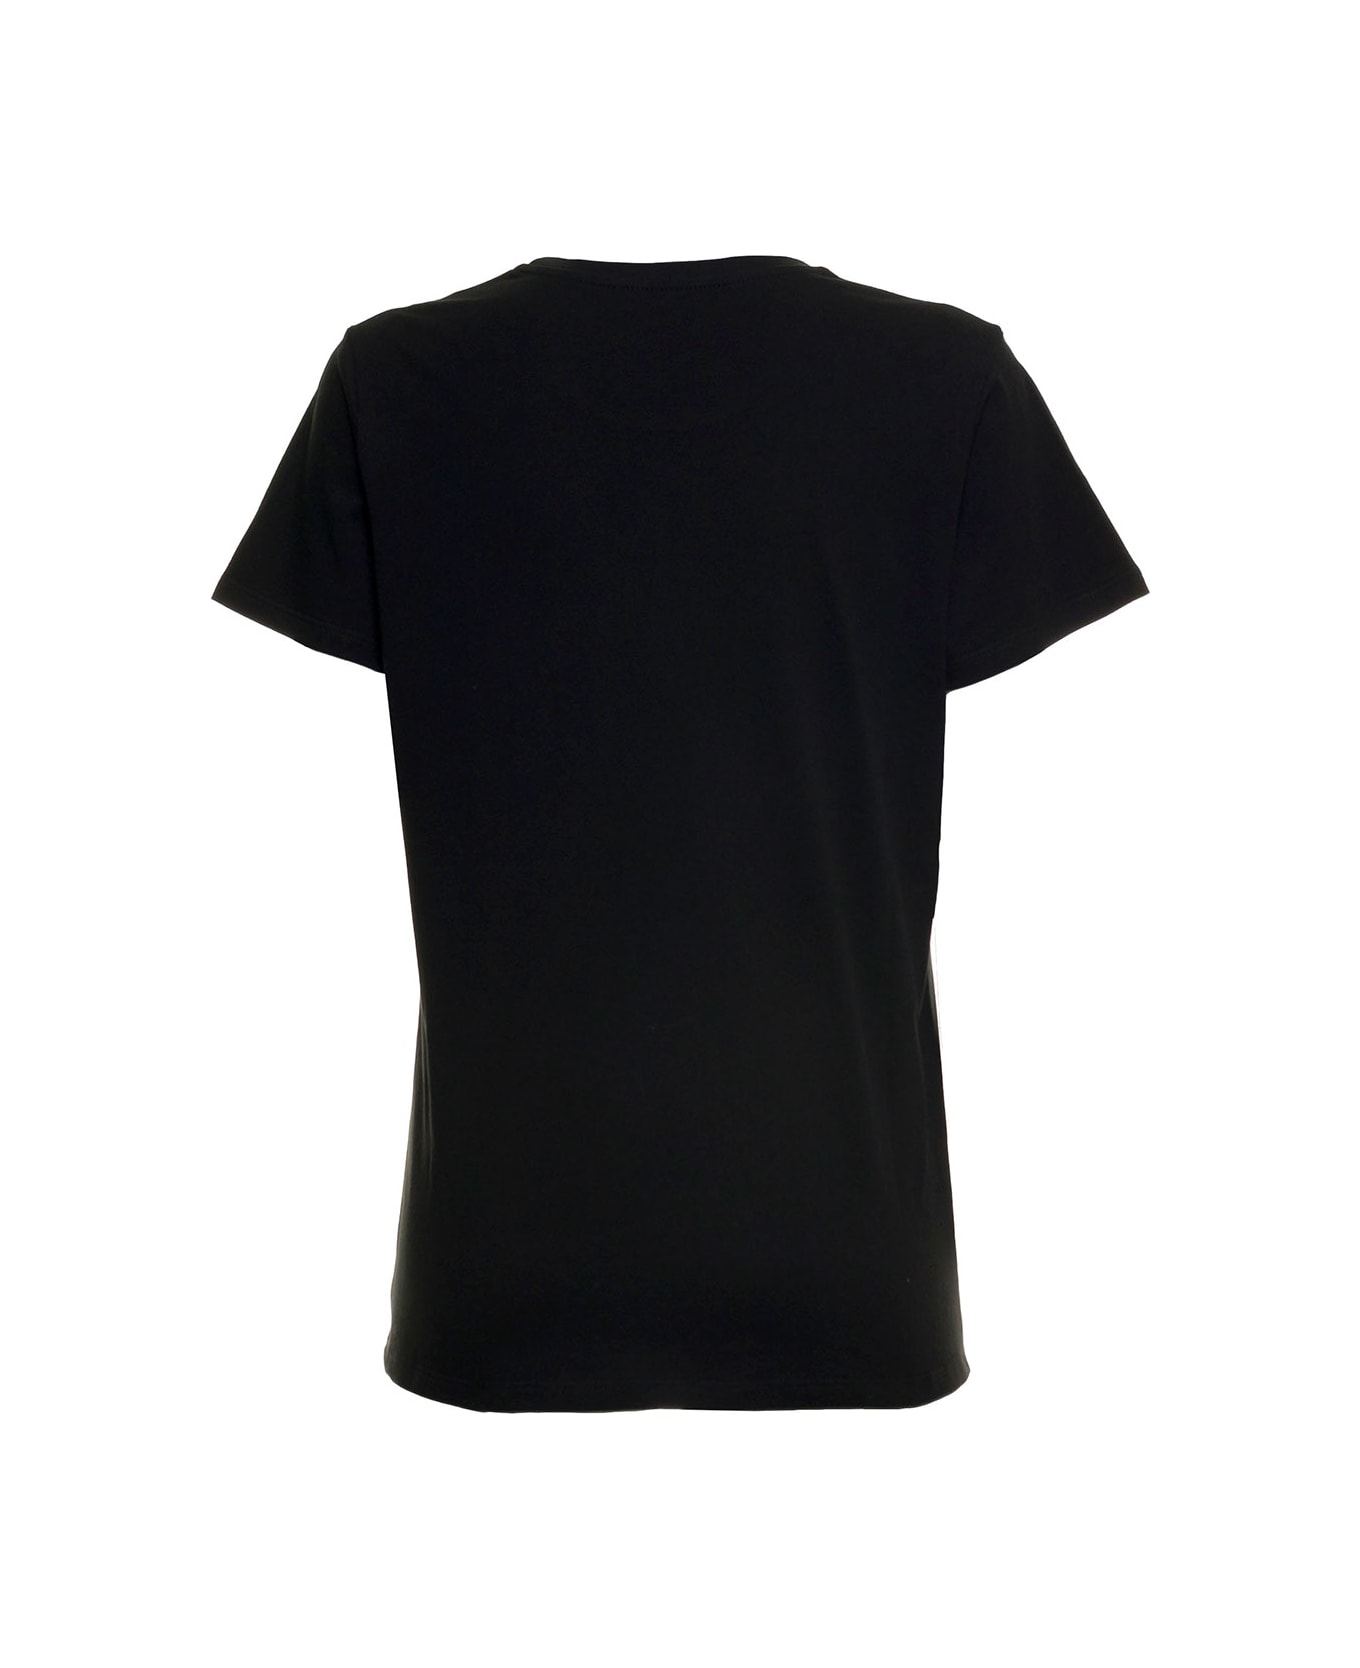 Alexander McQueen Black Cotton T-shirt With Logo Print - Black